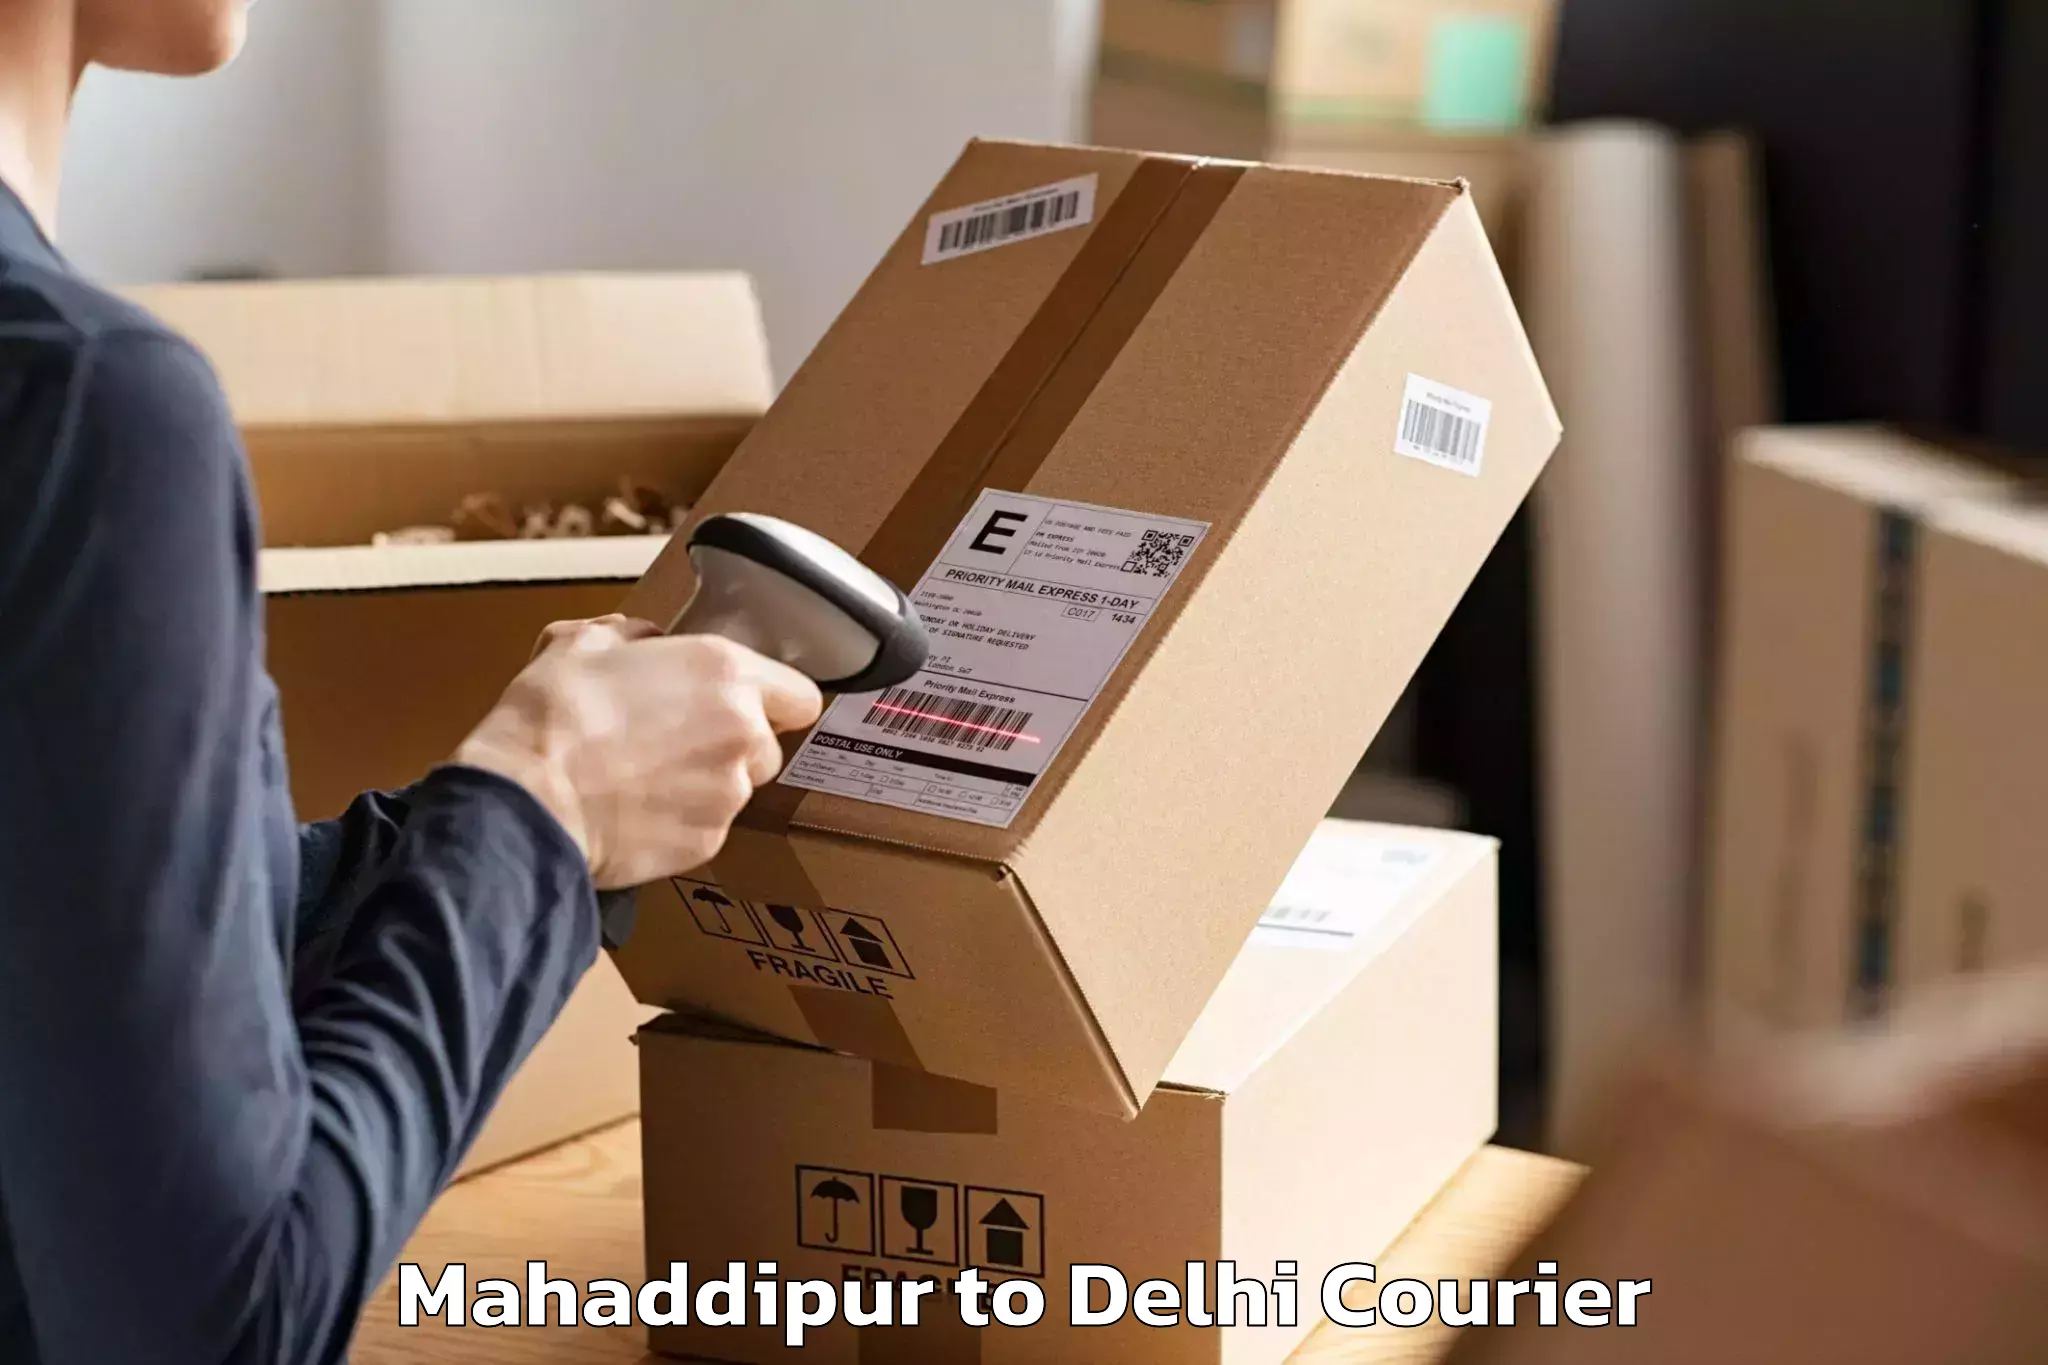 Furniture delivery service Mahaddipur to Burari